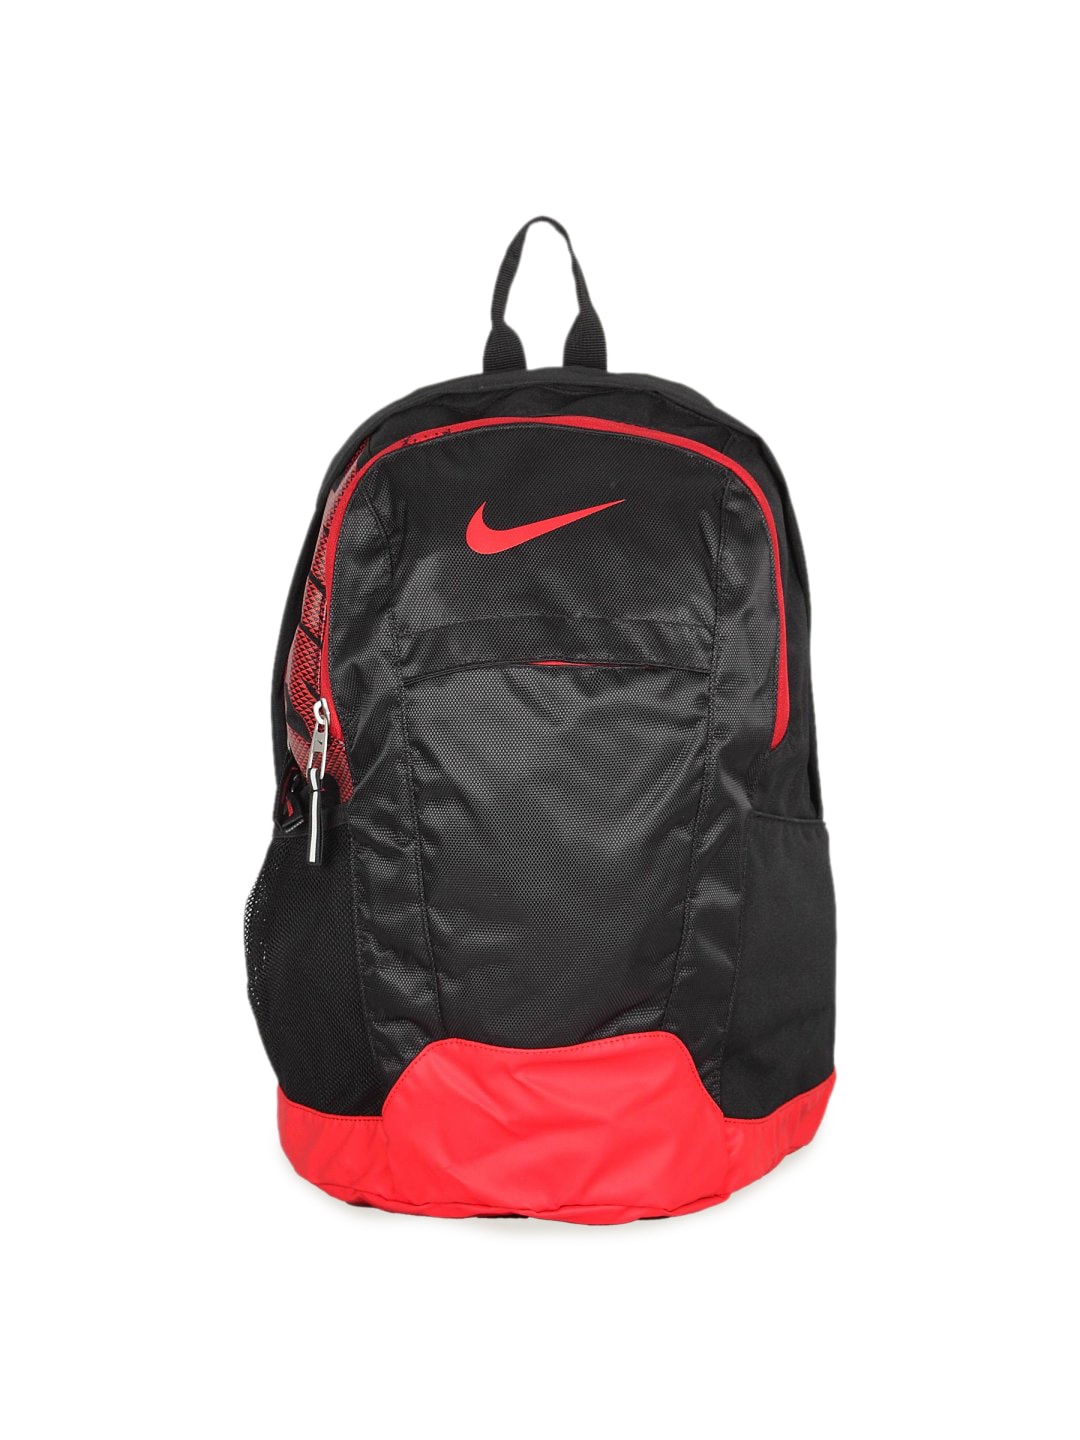 Nike Unisex Team Training Red Backpack